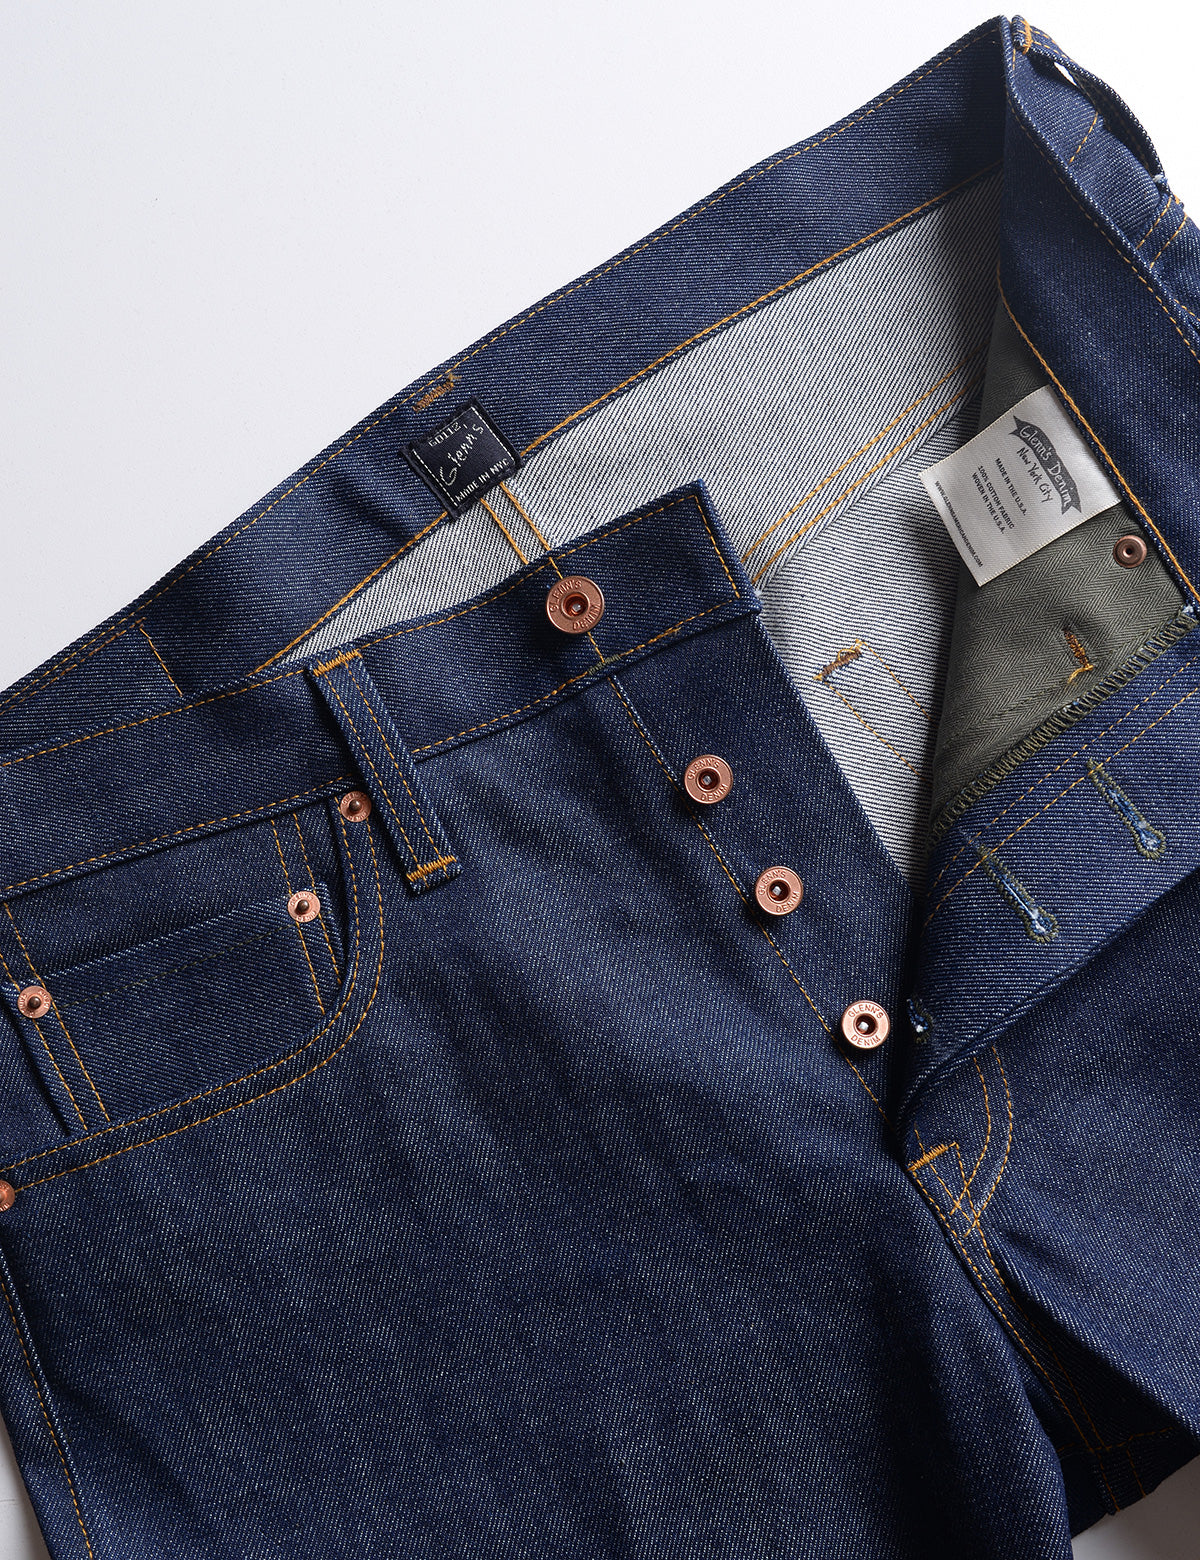 177 Selvedge Denim Jeans / Indigo - HebTroCo